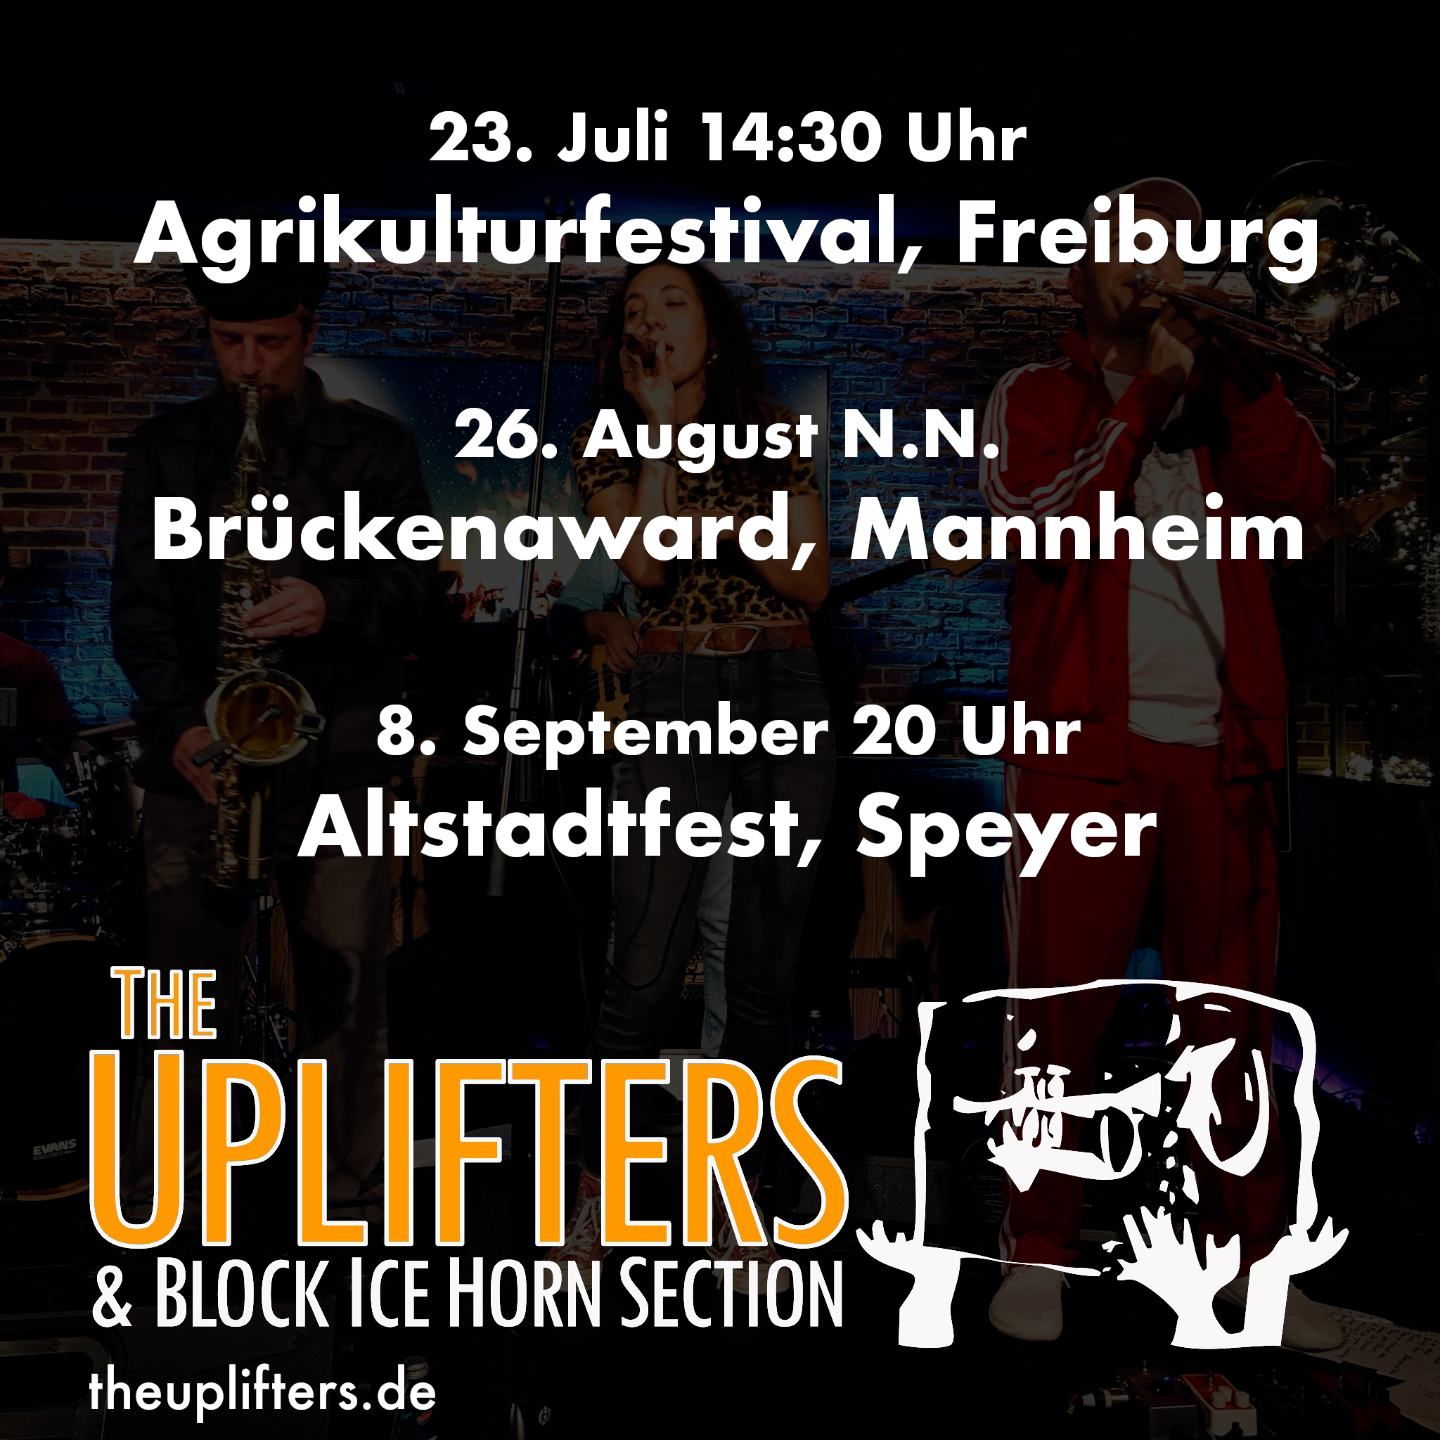 23. Juli 14:30 Agrikulturfestival, Freiburg
26. August Brückenaward, Mannheim
8. September Altstadtfest, Speyer